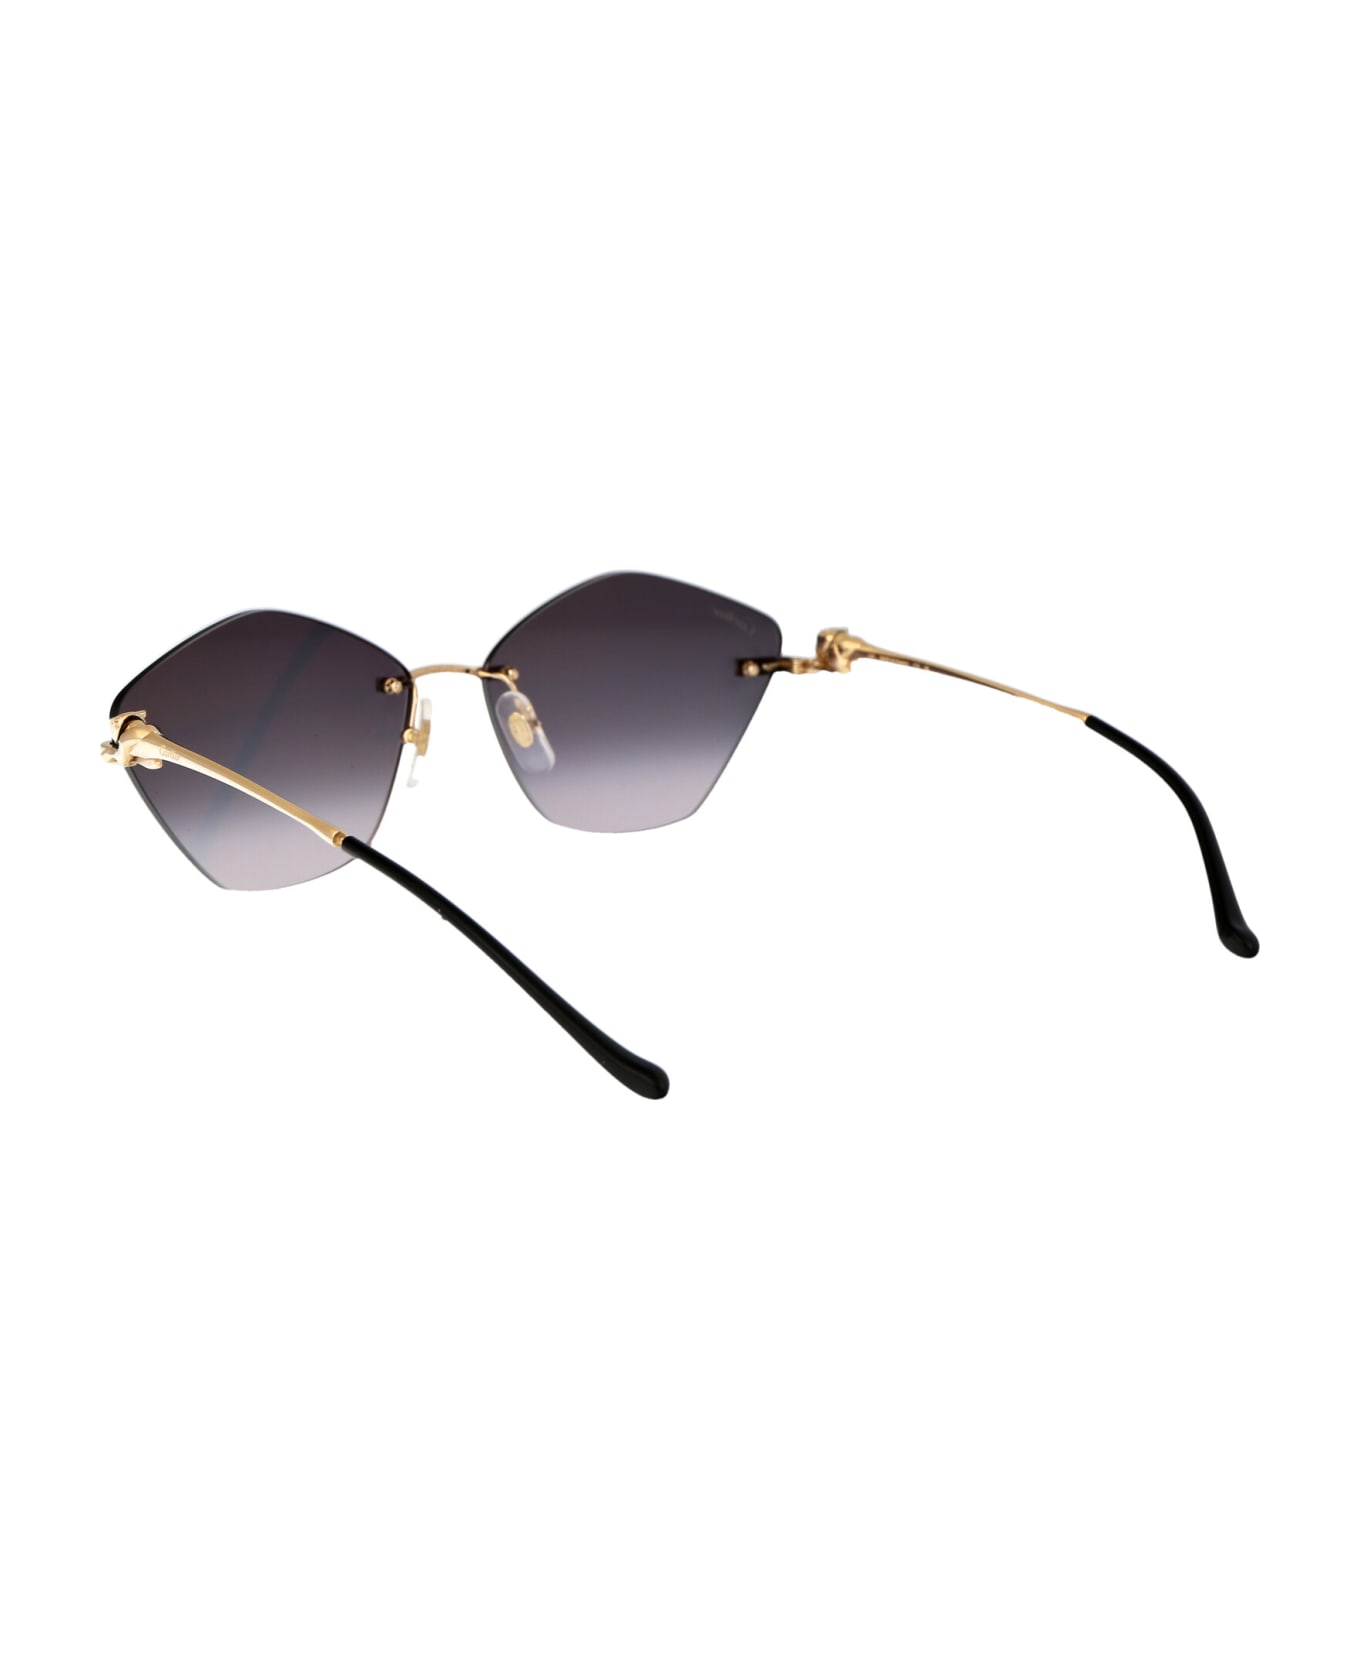 Cartier Eyewear Ct0429s Sunglasses - 001 GOLD GOLD GREY サングラス